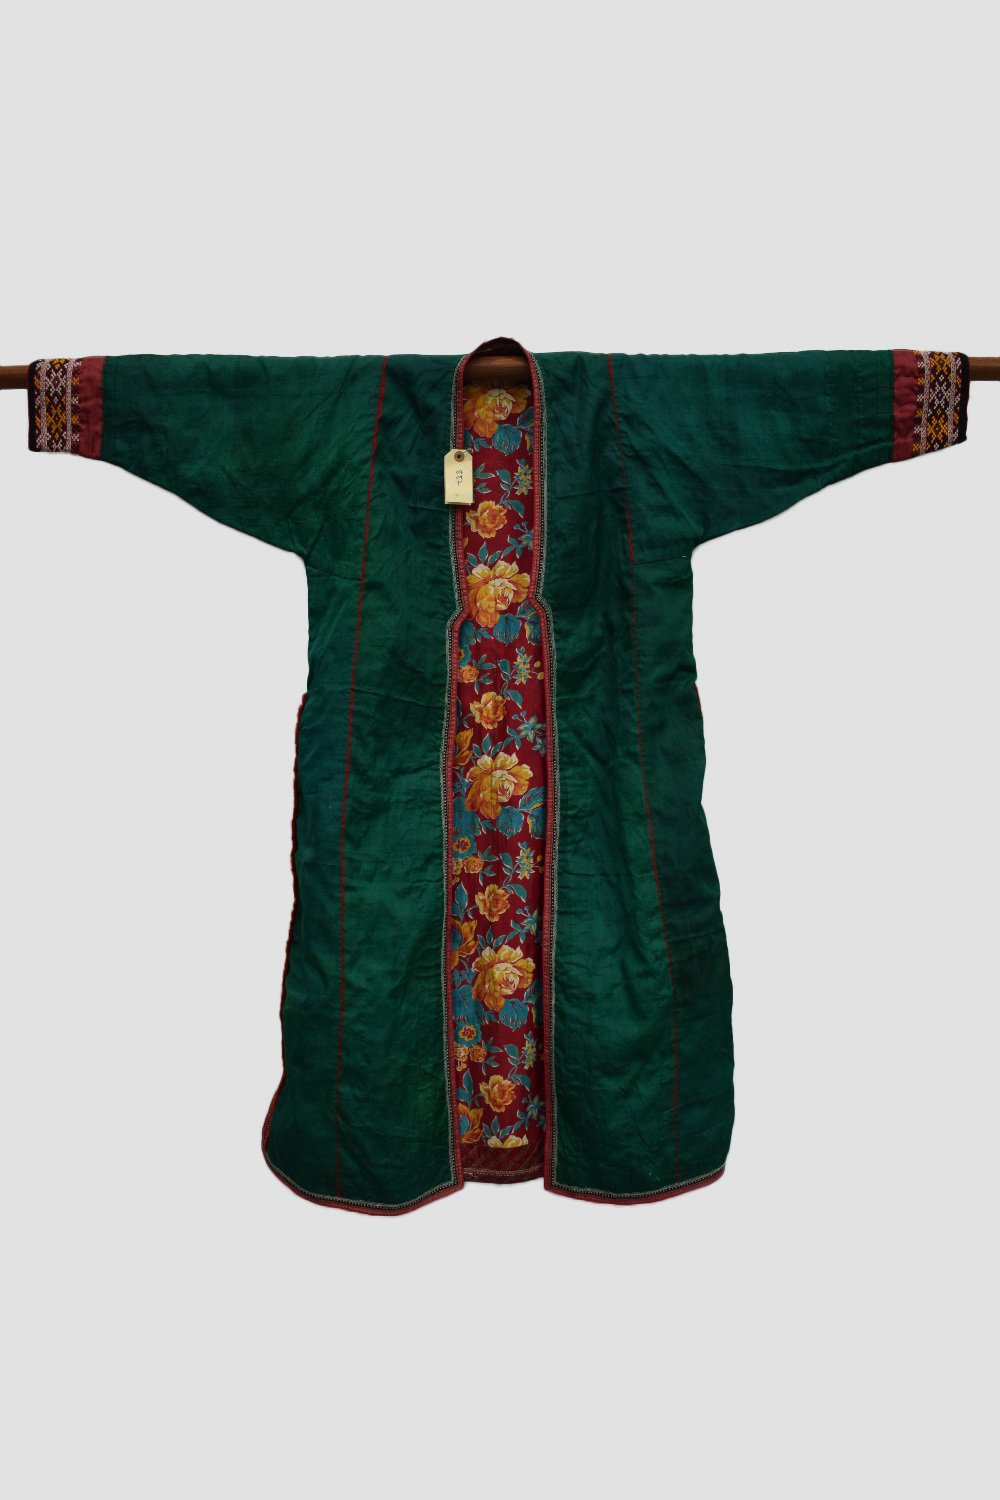 Turkmen bright green silk coat, Turkmenistan or Afghanistan,AMENDMENT TO ESTIMATE.